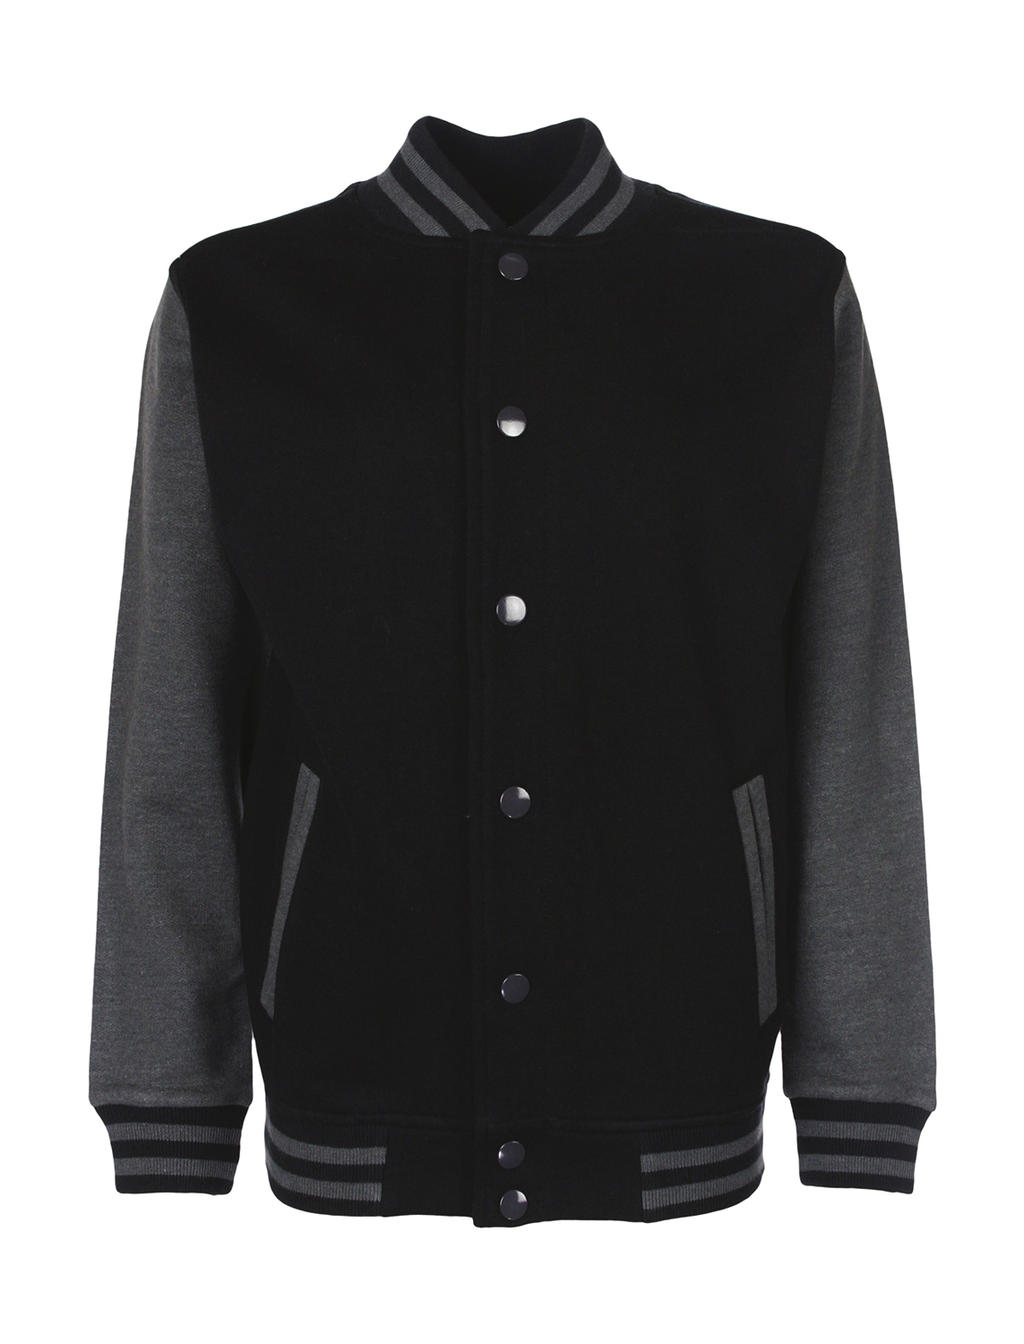  Junior Varsity Jacket in Farbe Black/Charcoal